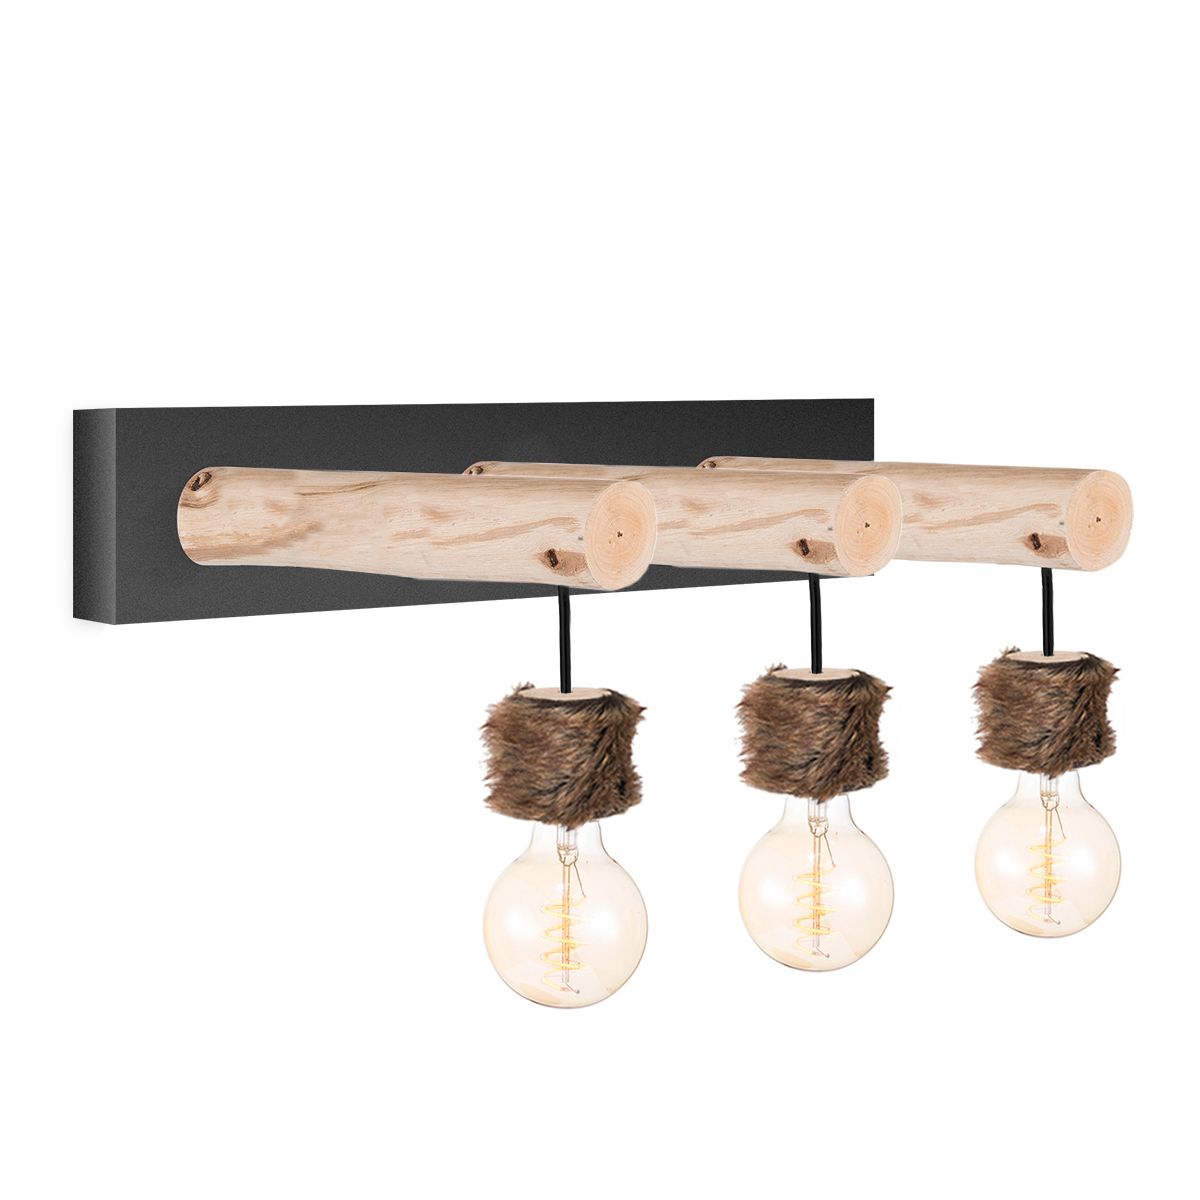 Tangla lighting - TLW3018-03SB - LED Wall lamp 3 Lights - metal + FSC wood + fur - sand black + natural angling - E27